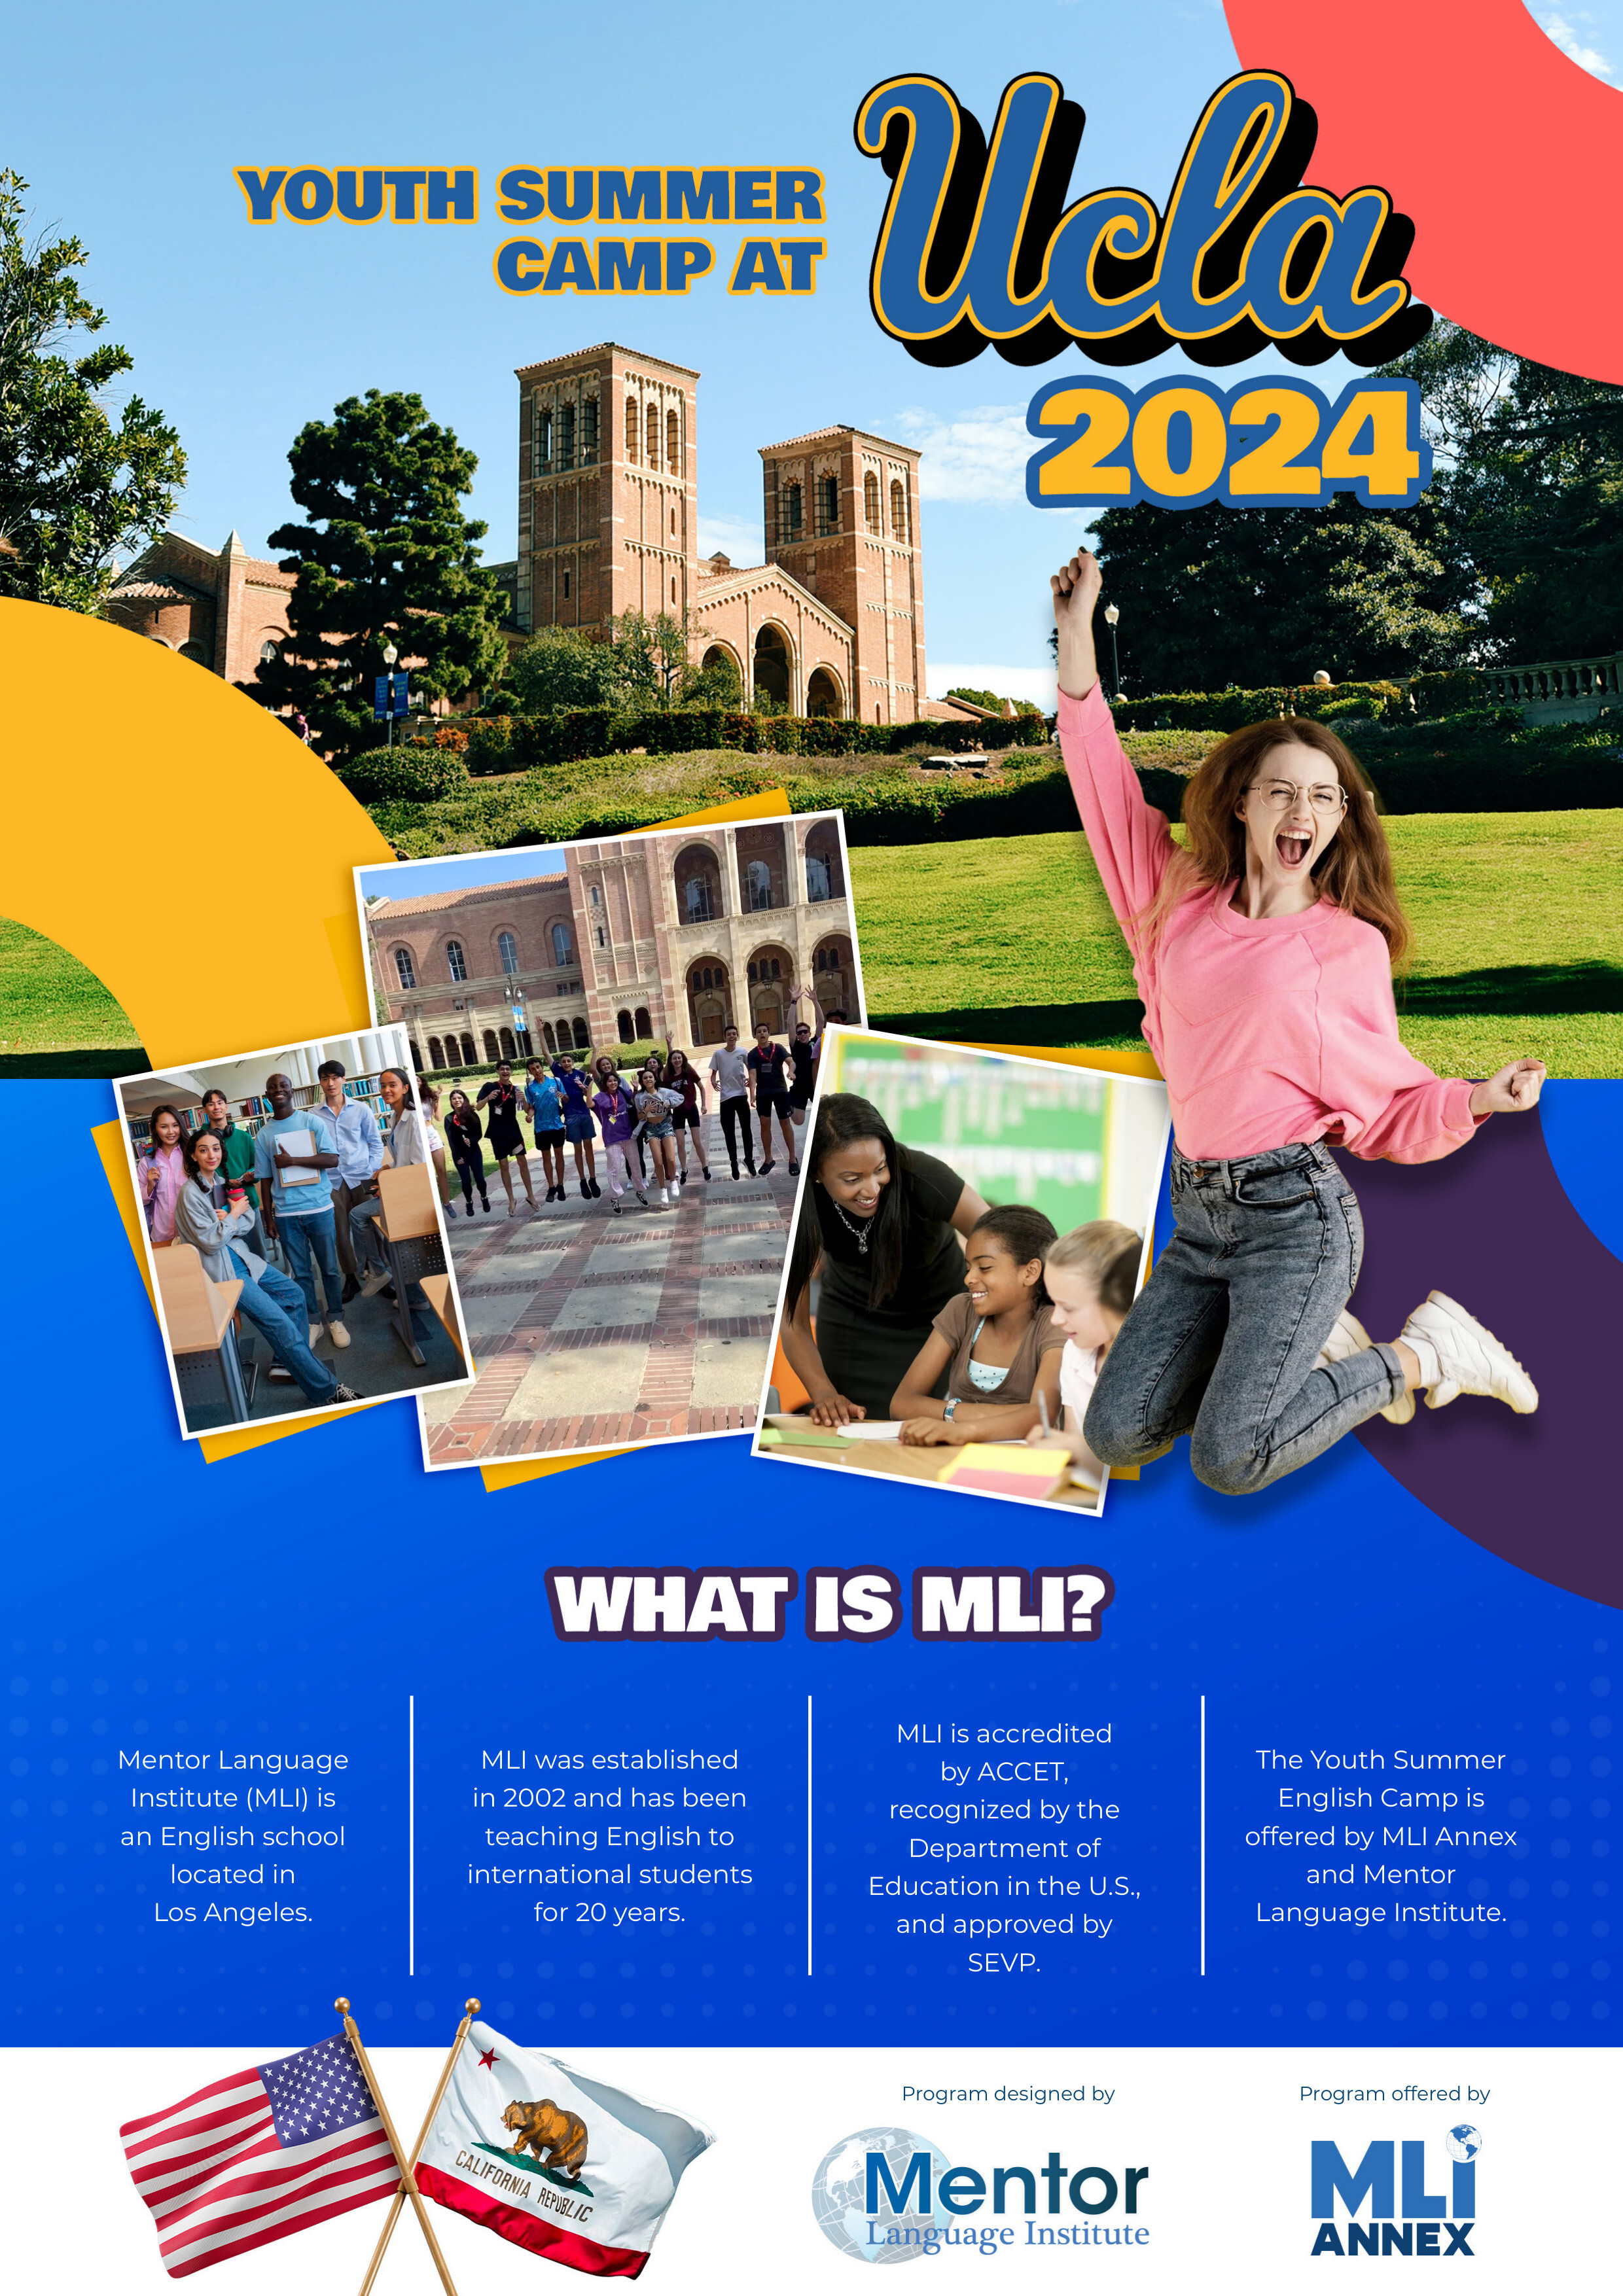 UCLA Summer Camp for International students Mentor Language Institute